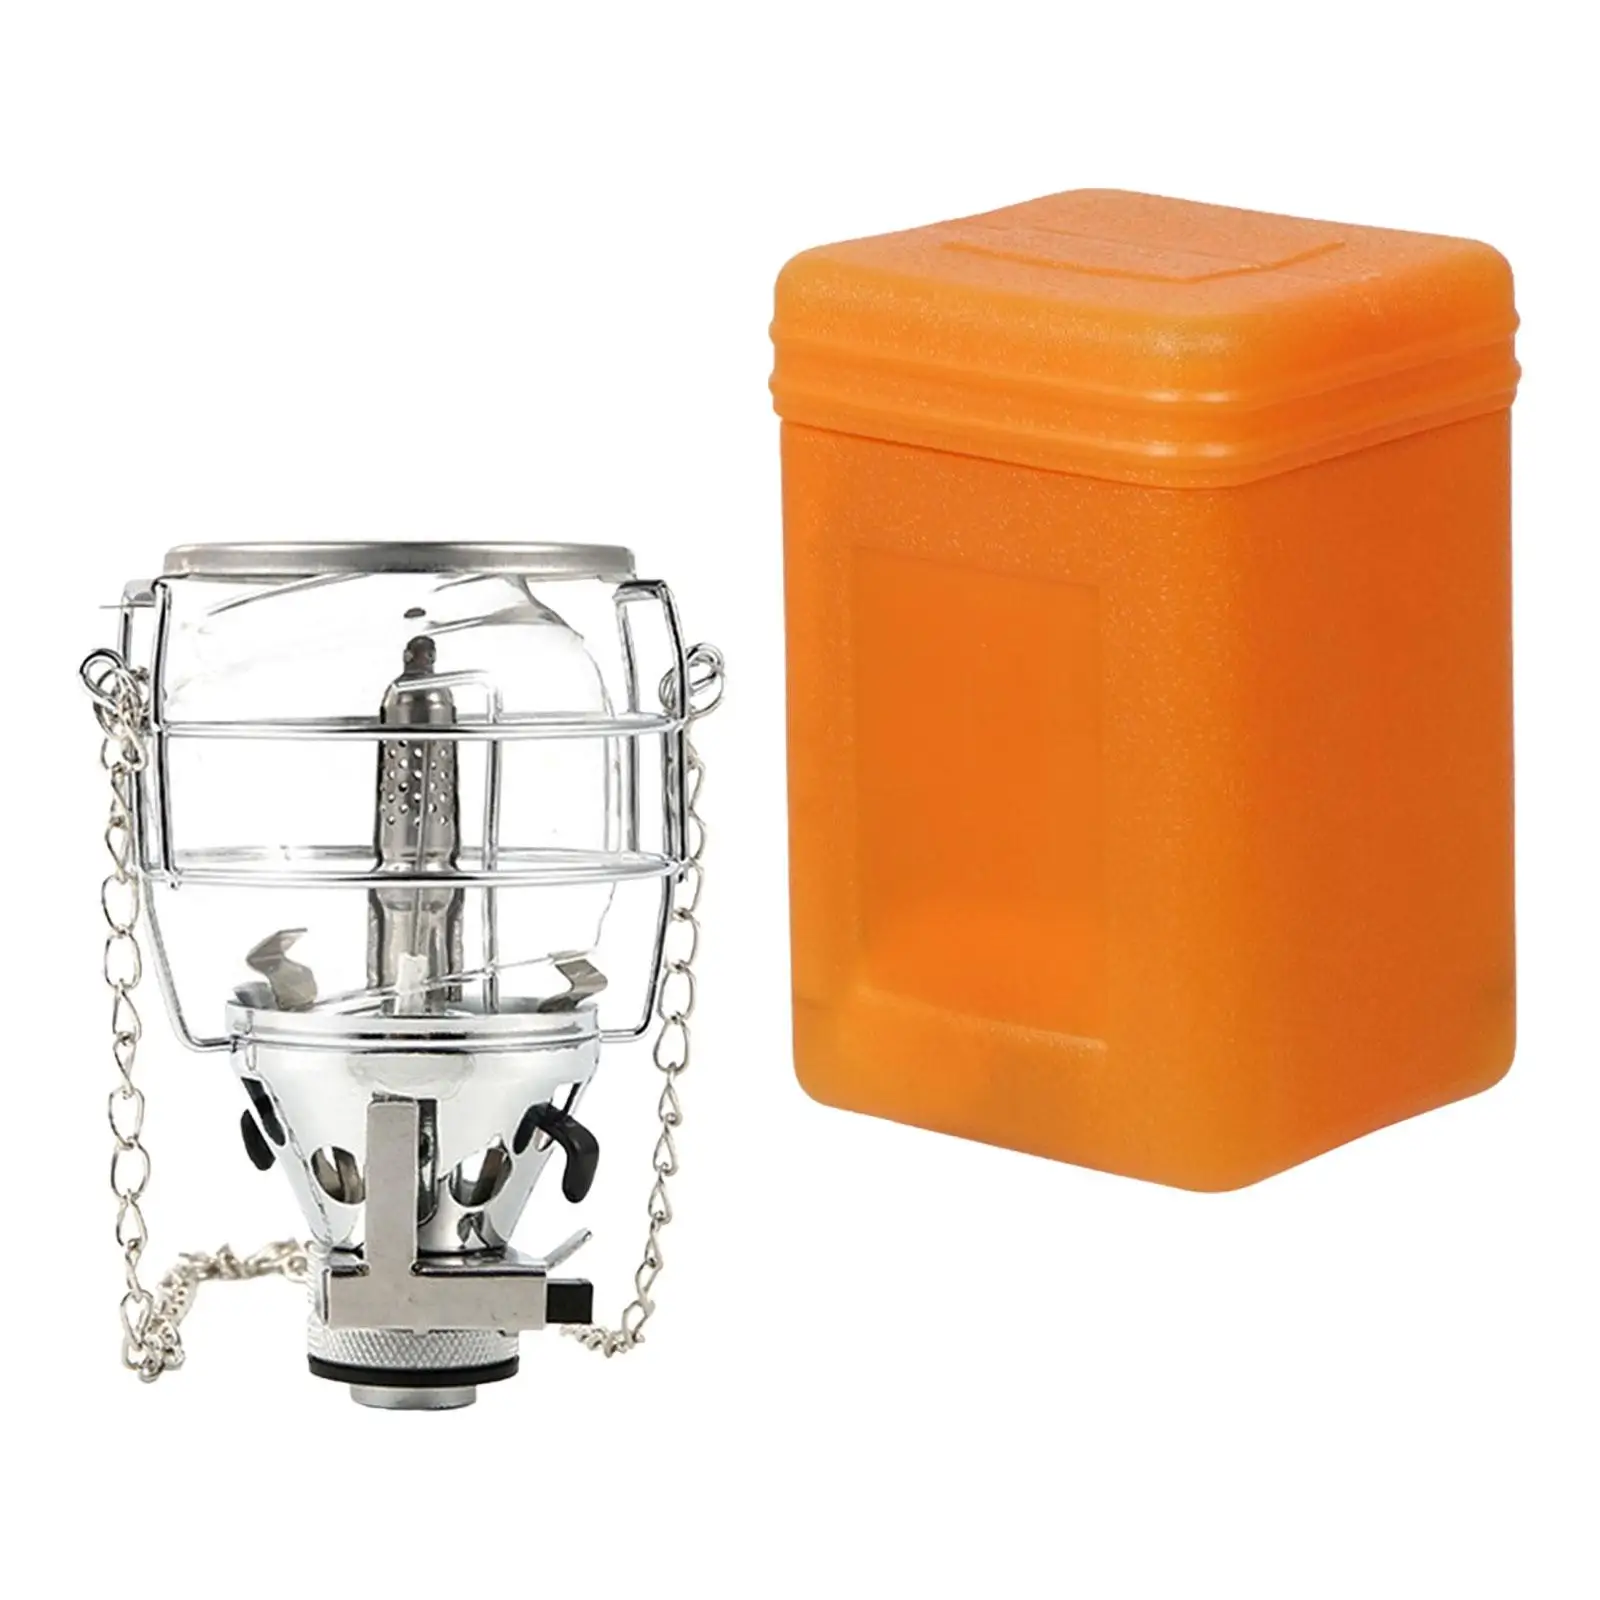 Portable Gas Lantern Fuel Lamp Lighting Equipment Outdoor Light Camping Light for Trekking Fishing Backpacking Picnic Hiking